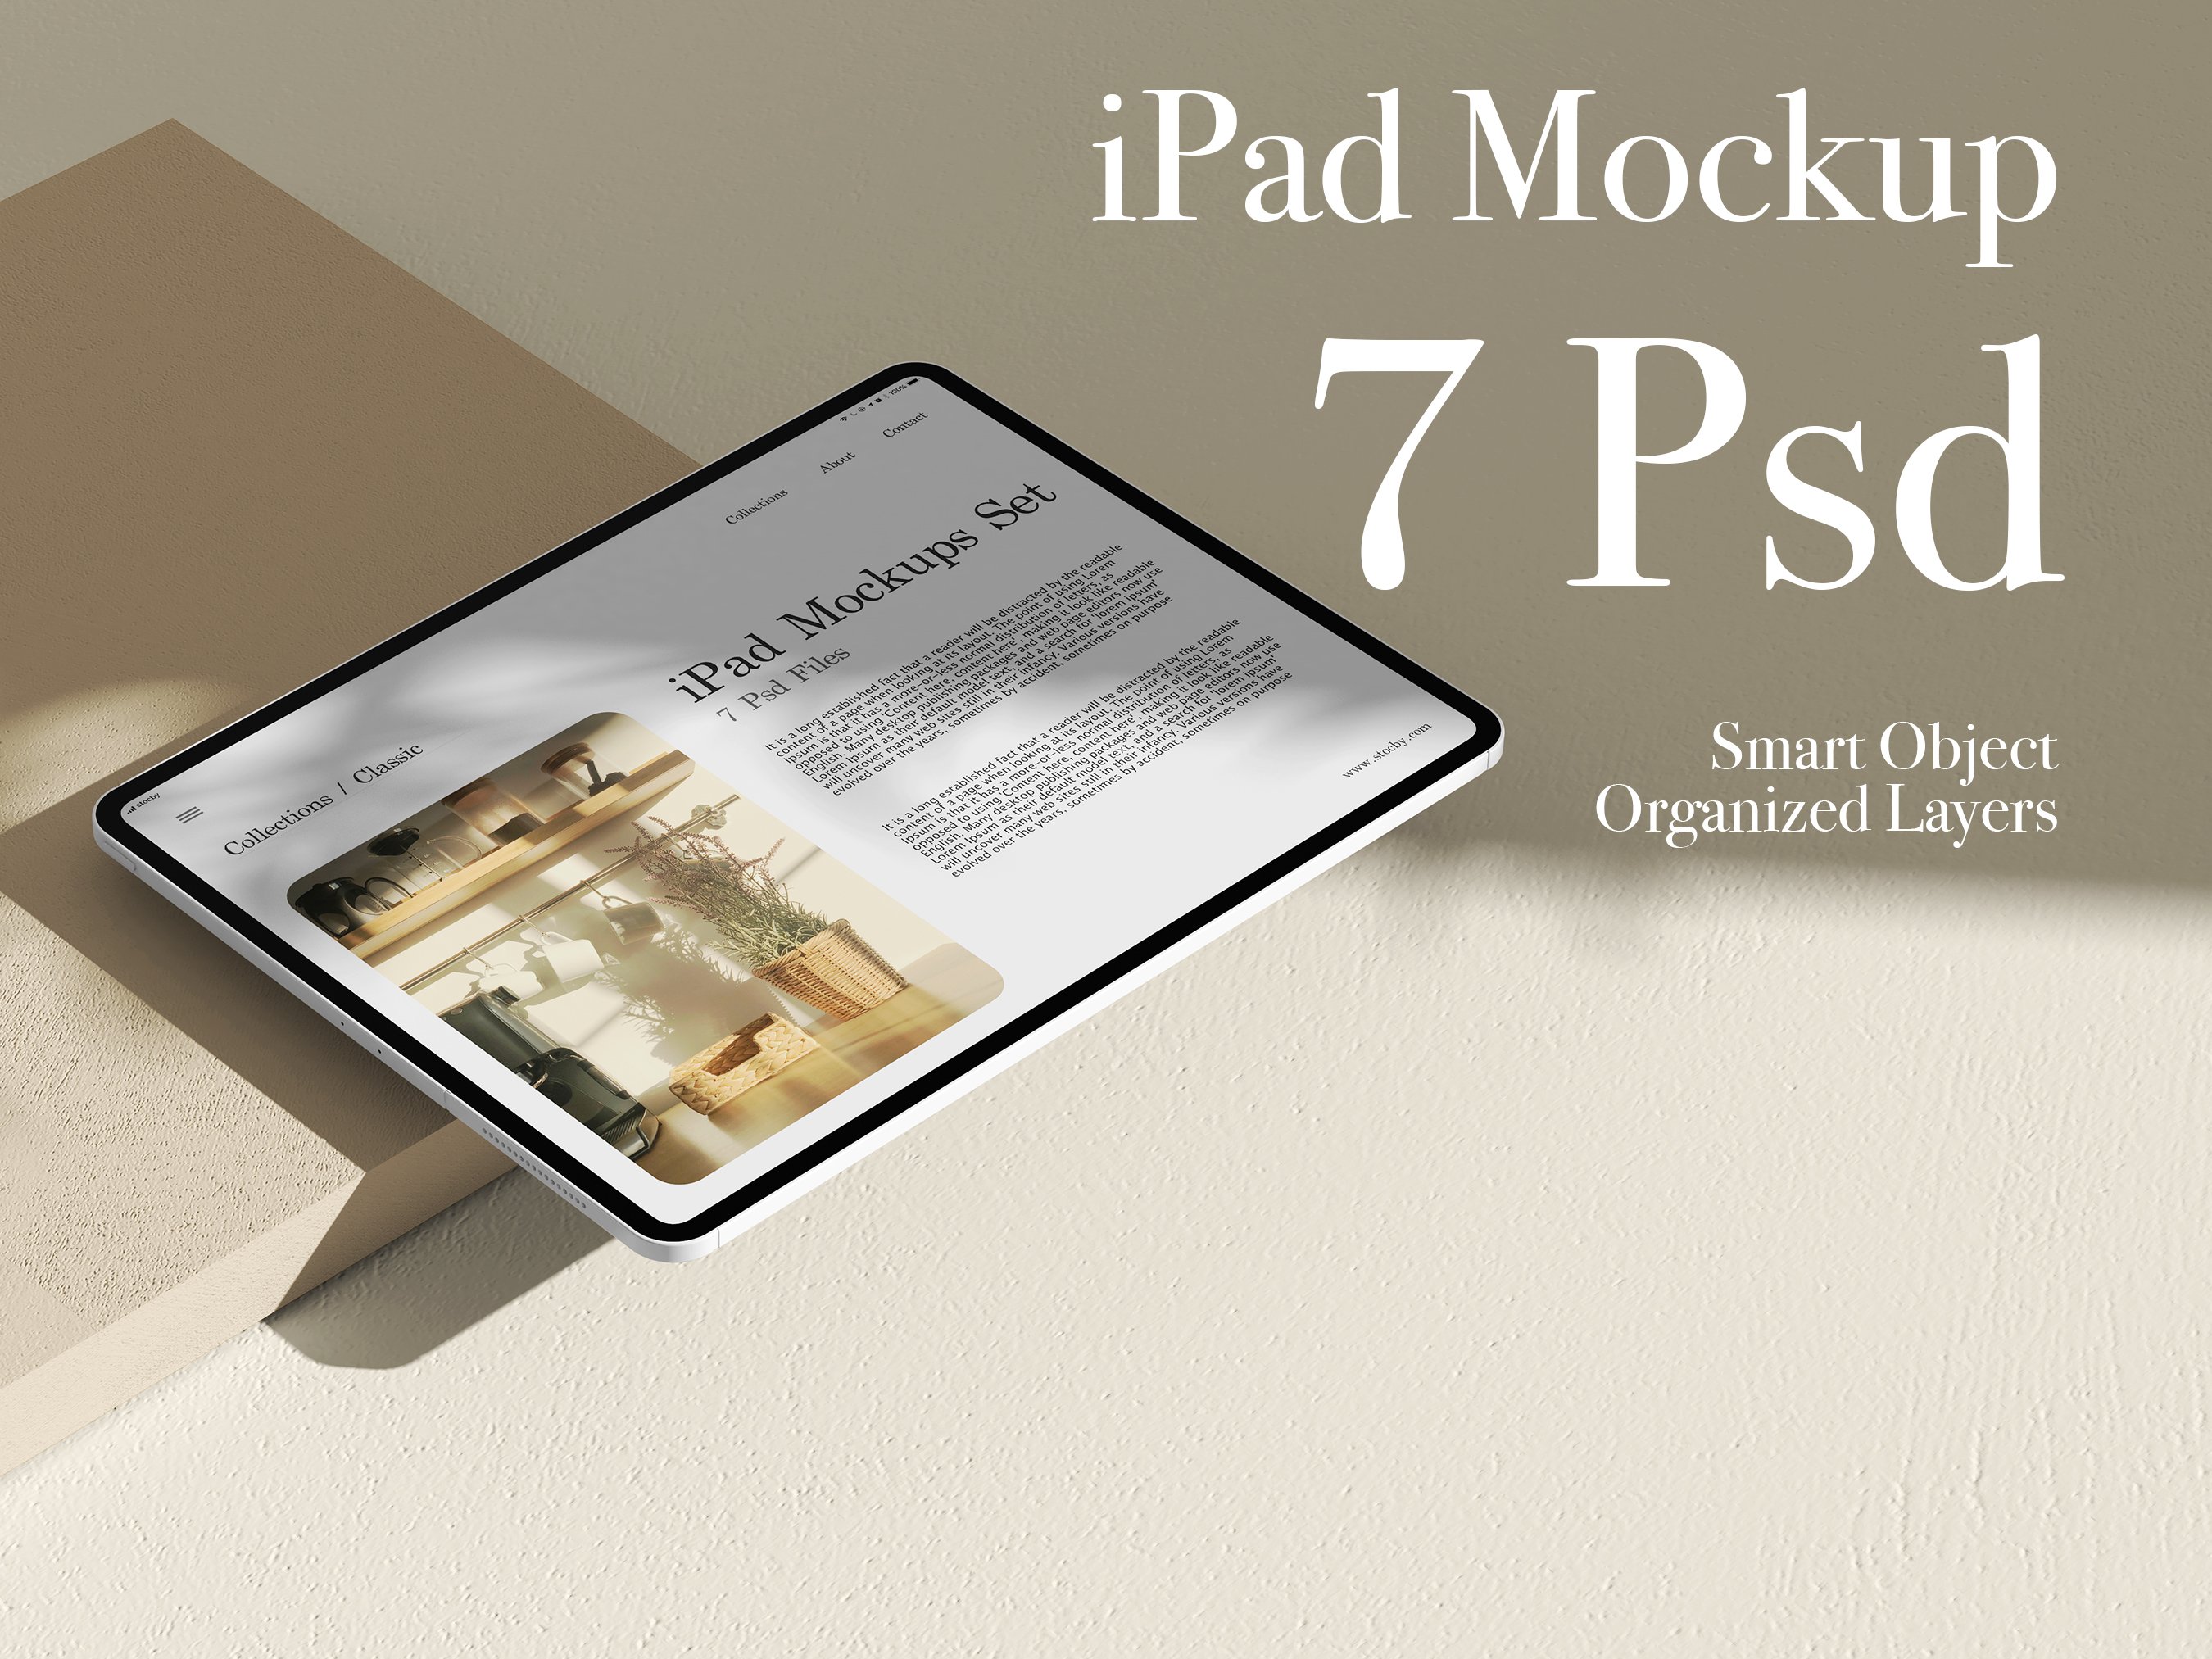 iPad Mockup 7 Psd Files cover image.